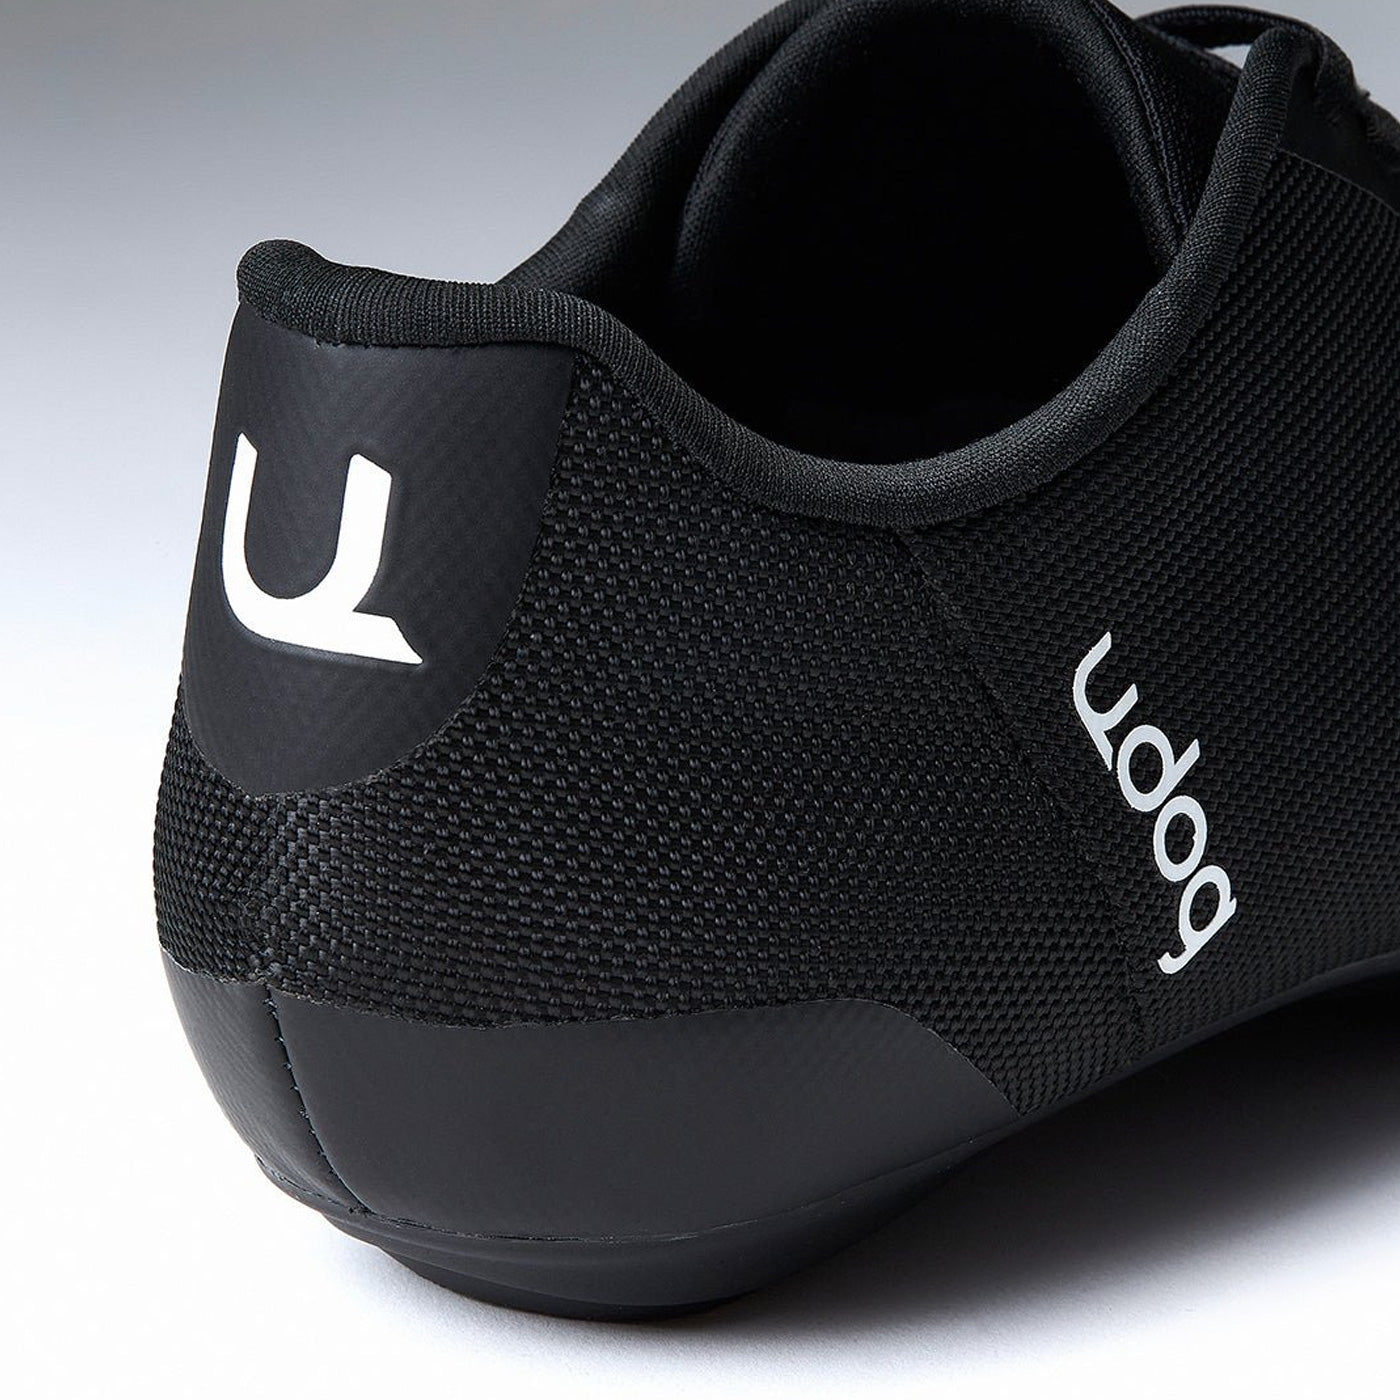 Udog Tensione shoes - Black